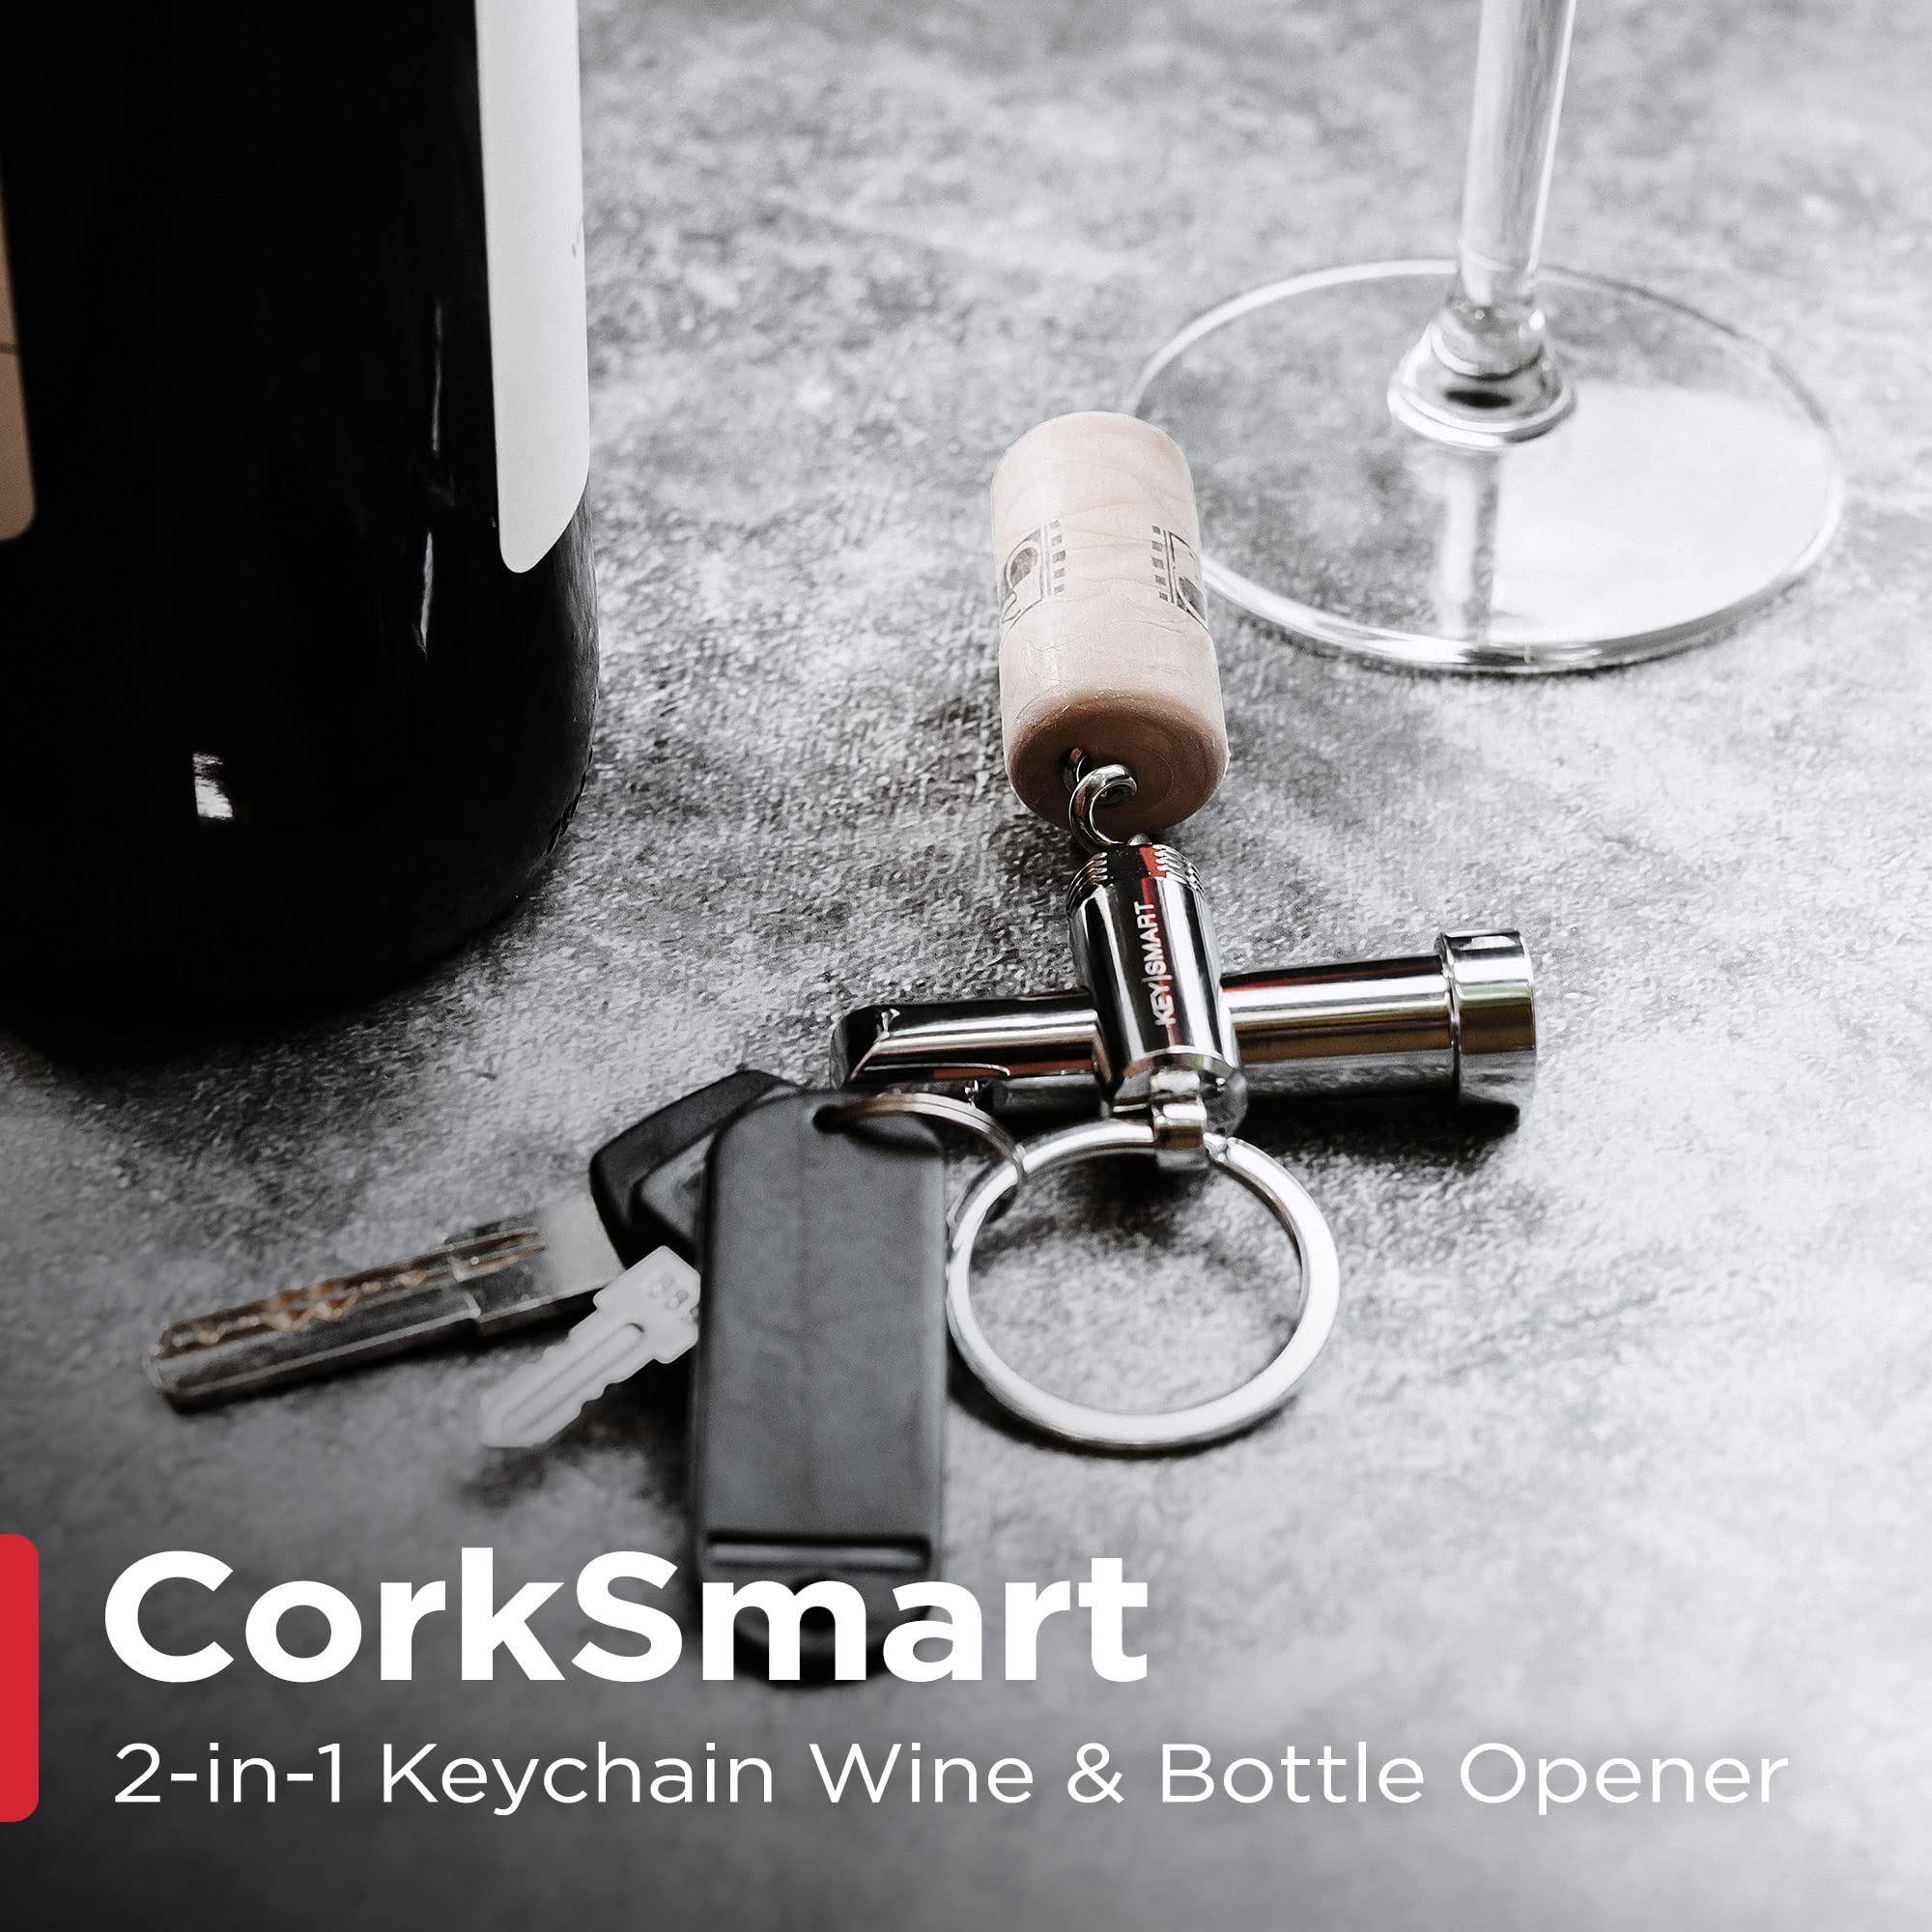 KeySmart CorkSmart - 2-in-1 Keychain Wine Opener and Bottle Opener, the Ultimate Dual Bottle Opener and Wine Bottle Opener Corkscrew Keychain Accessory